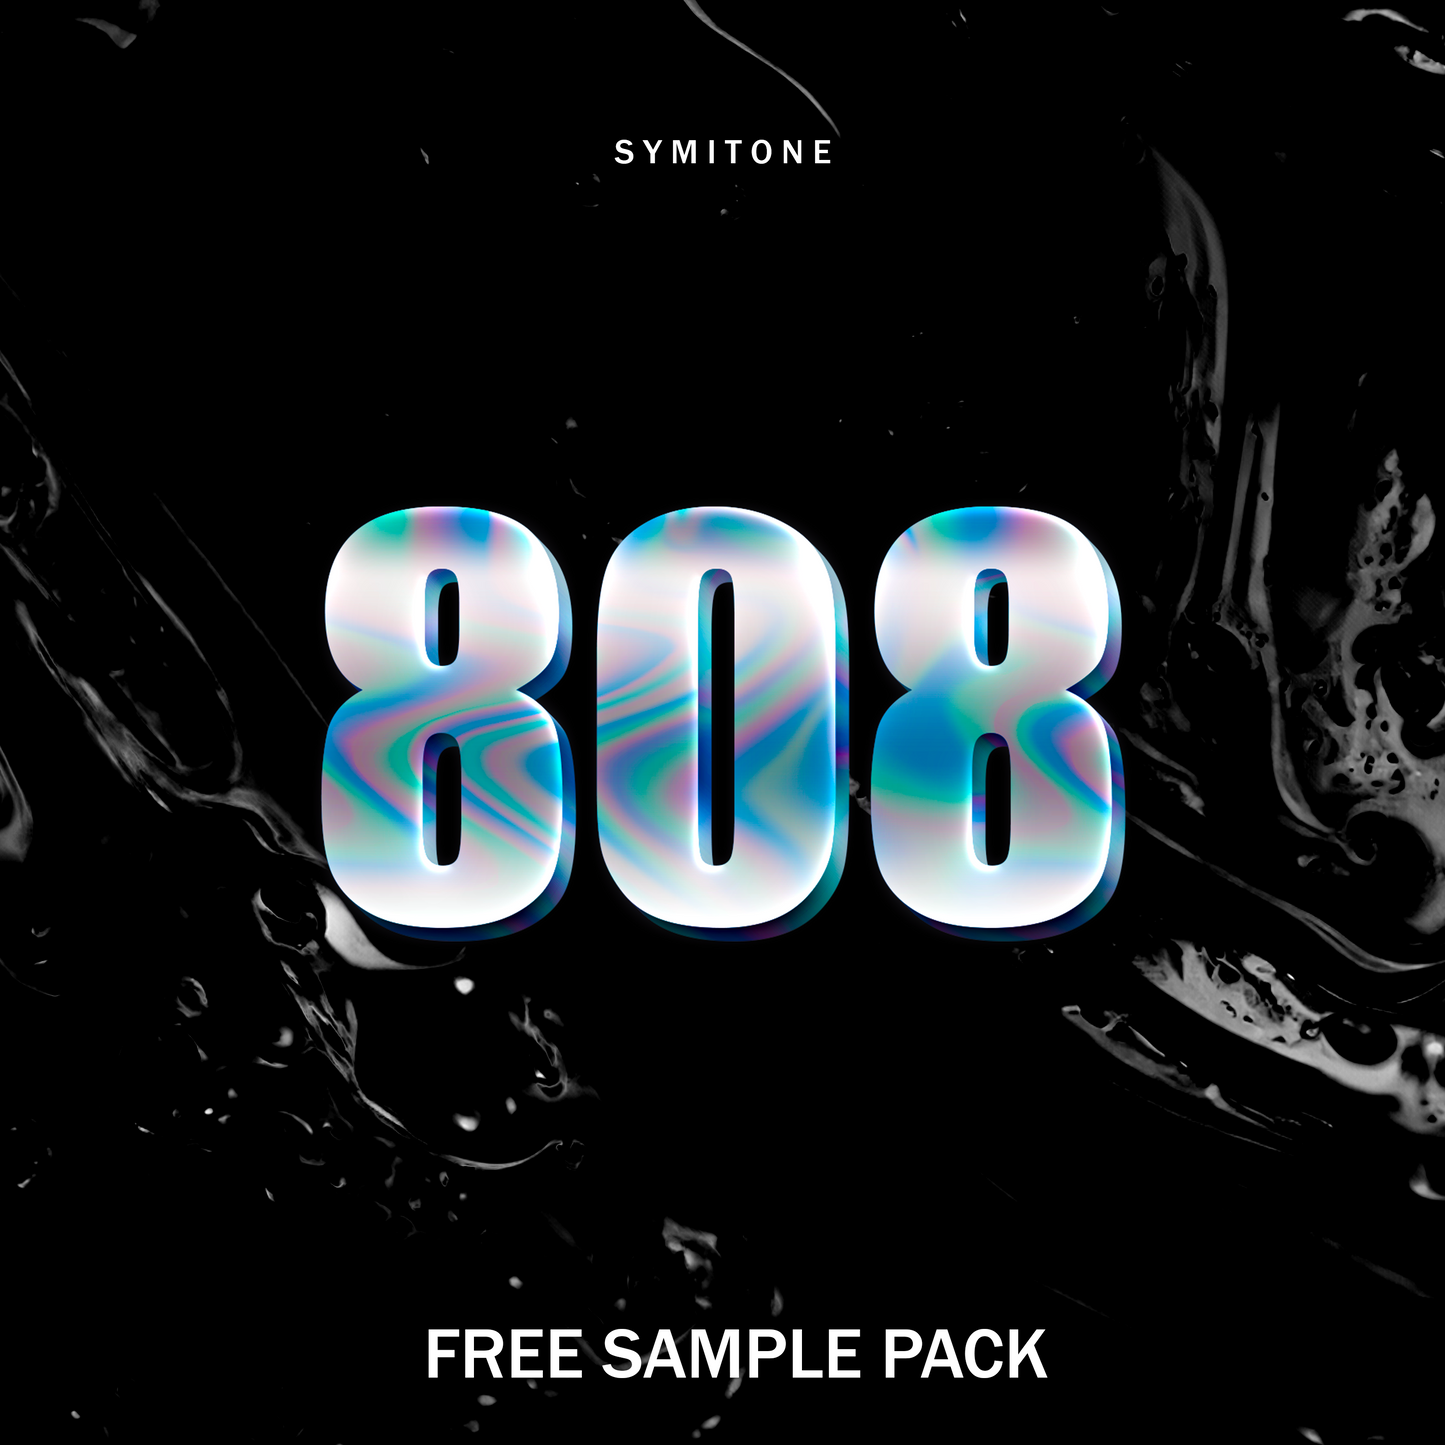 Symitone Free 808s Pack Vol.1